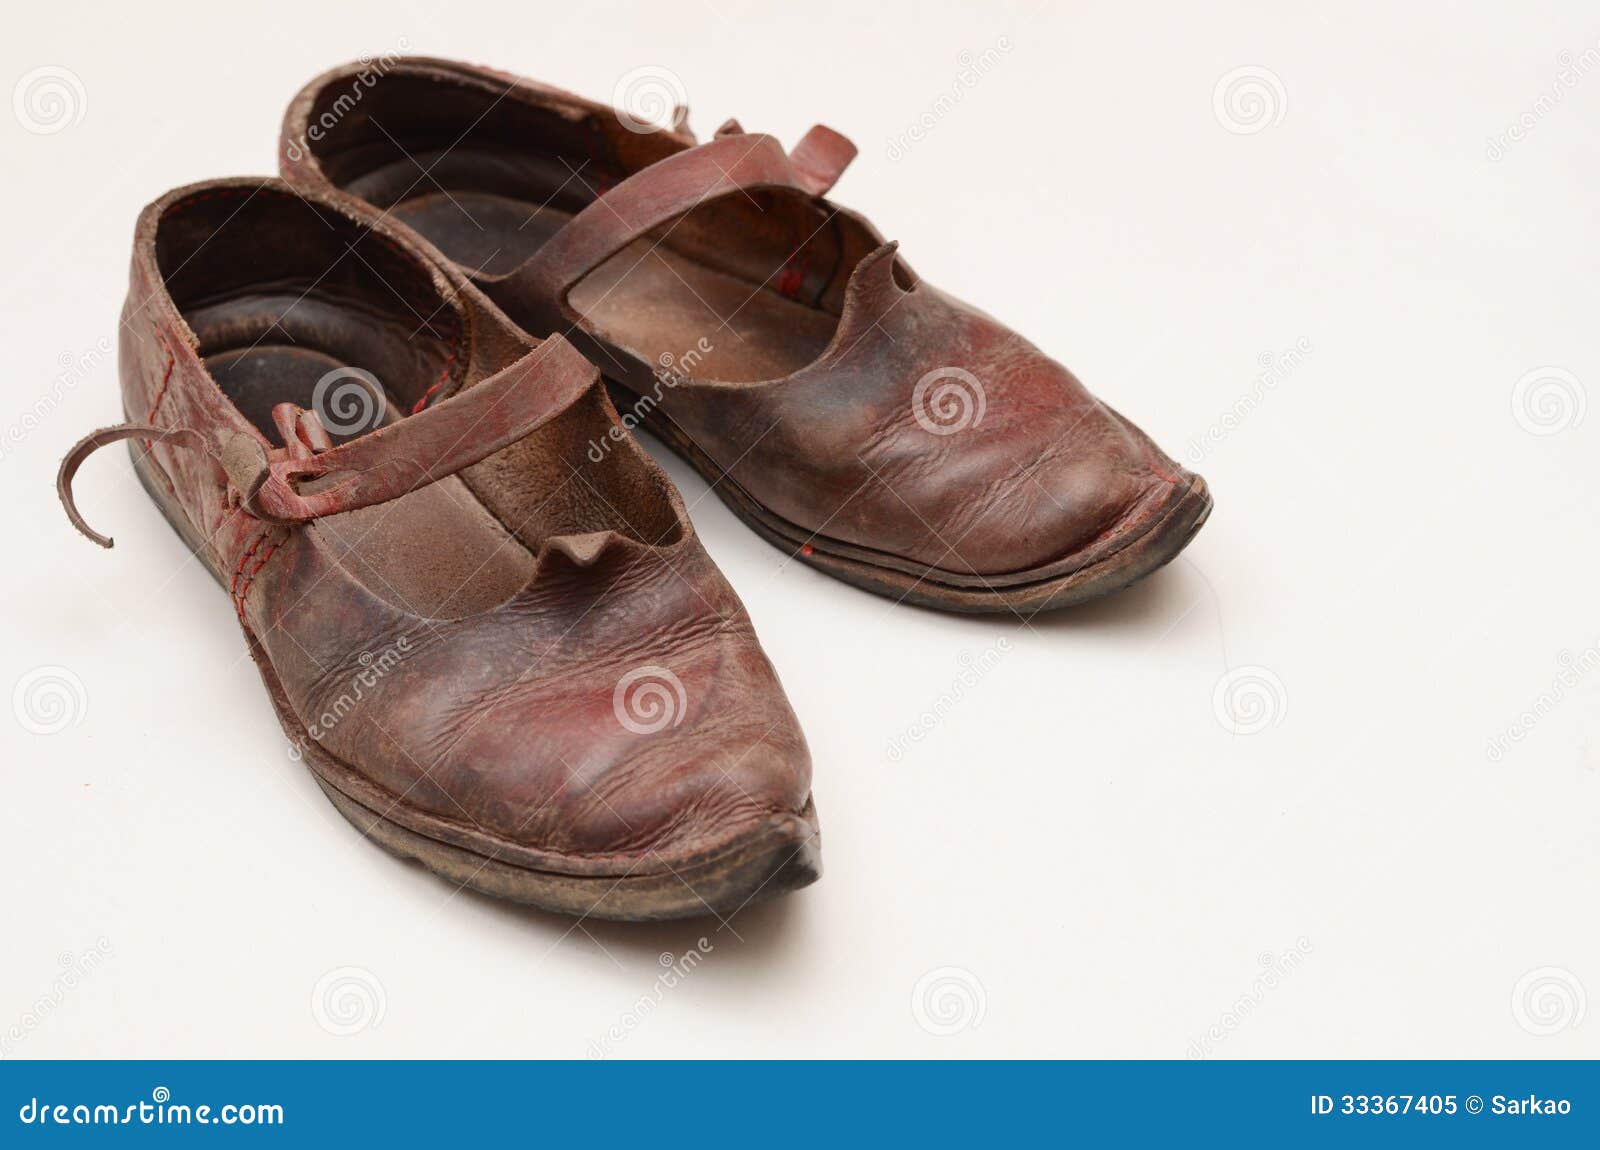 Historical Shoes Royalty Free Stock Photo - Image: 33367405